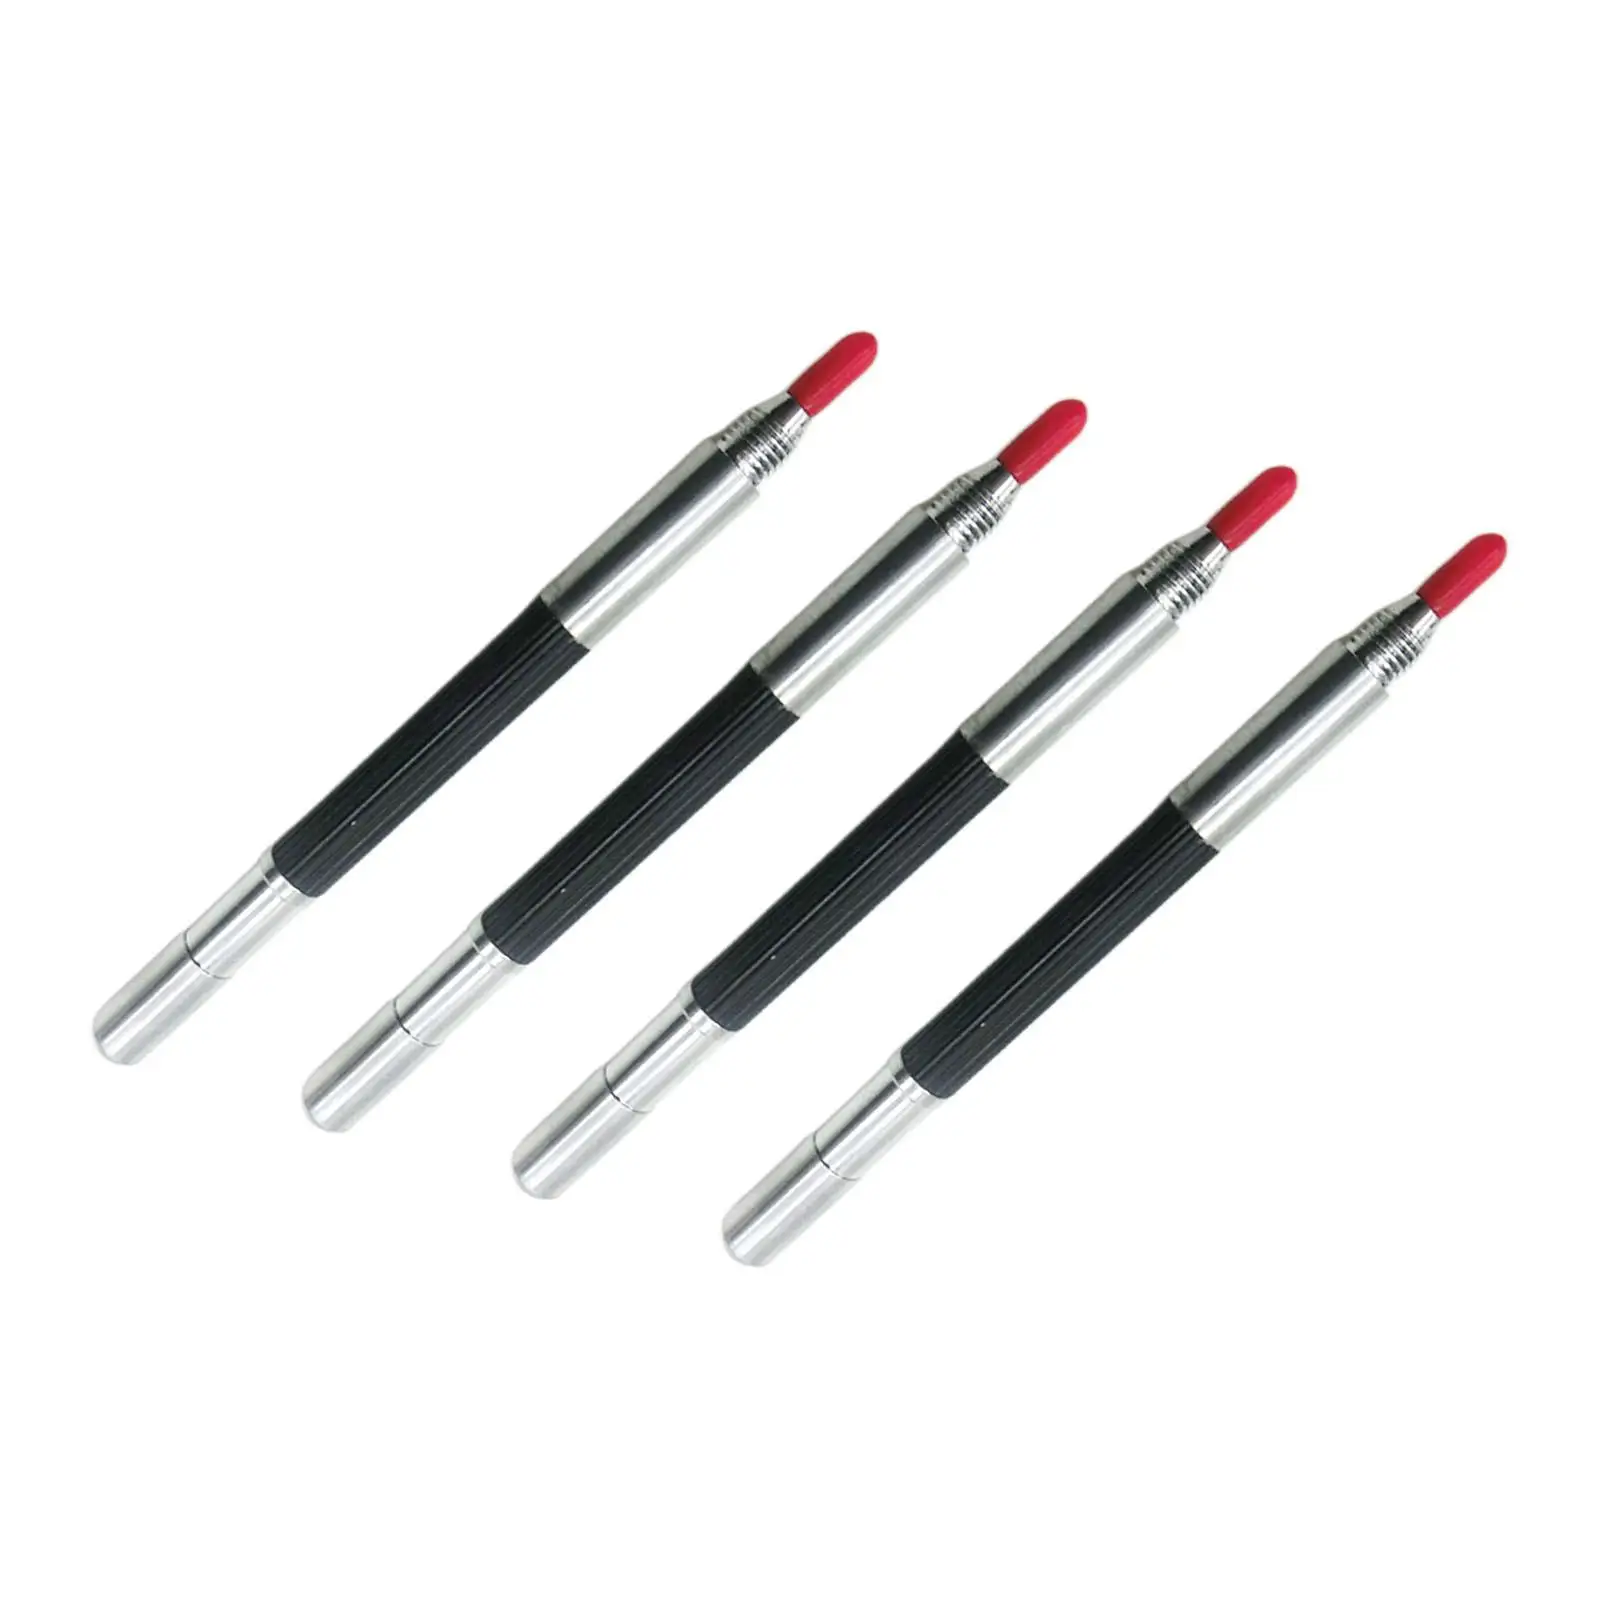 4x Portable Engraving Pen Long Head Double Head Construction Marking Tools Glass Marker Tungsten Carbide Scribing Pen for Glass